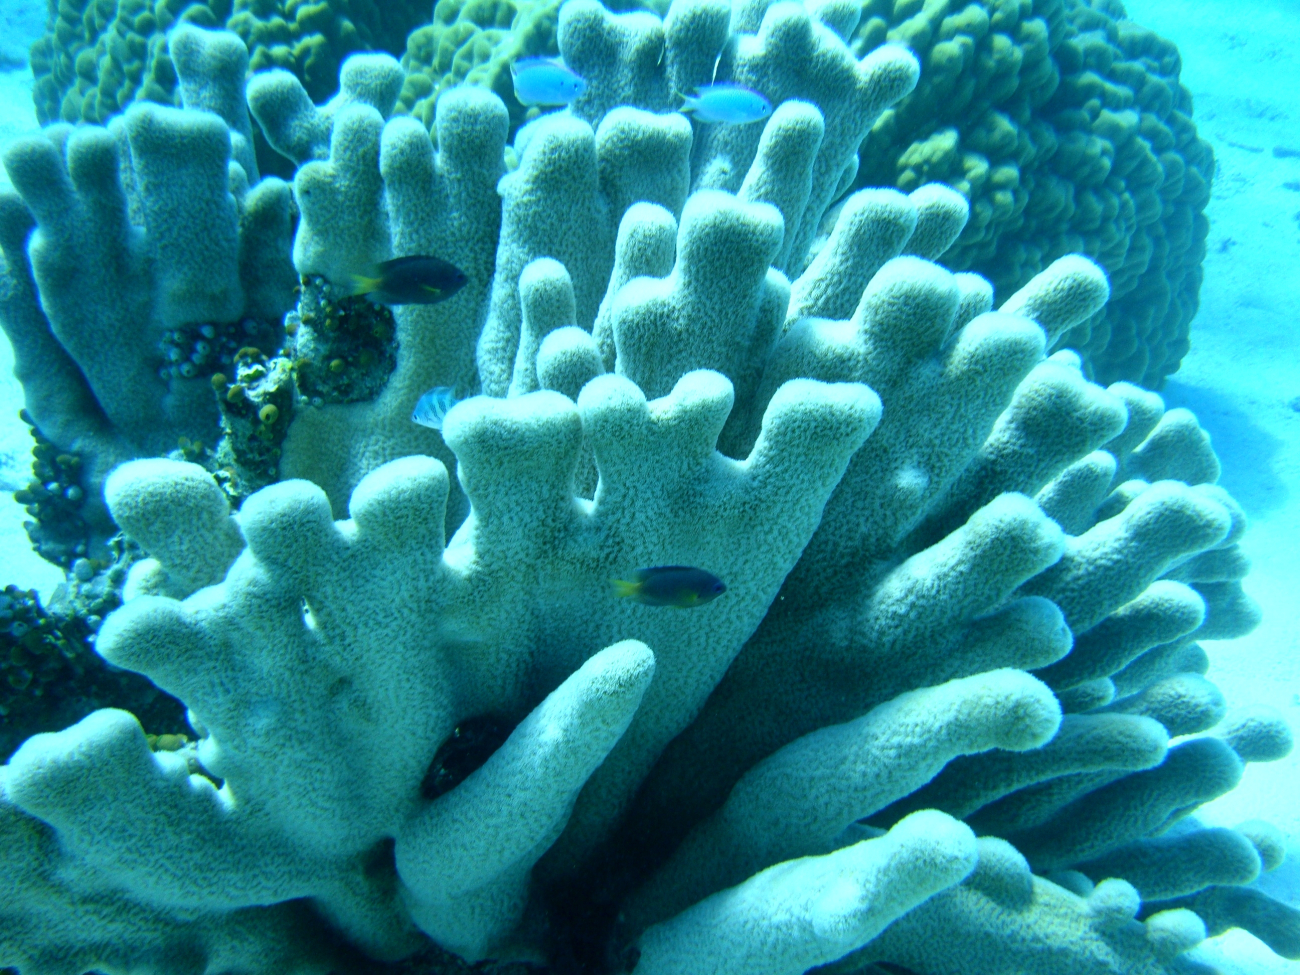 Poritidae coral Porites sp